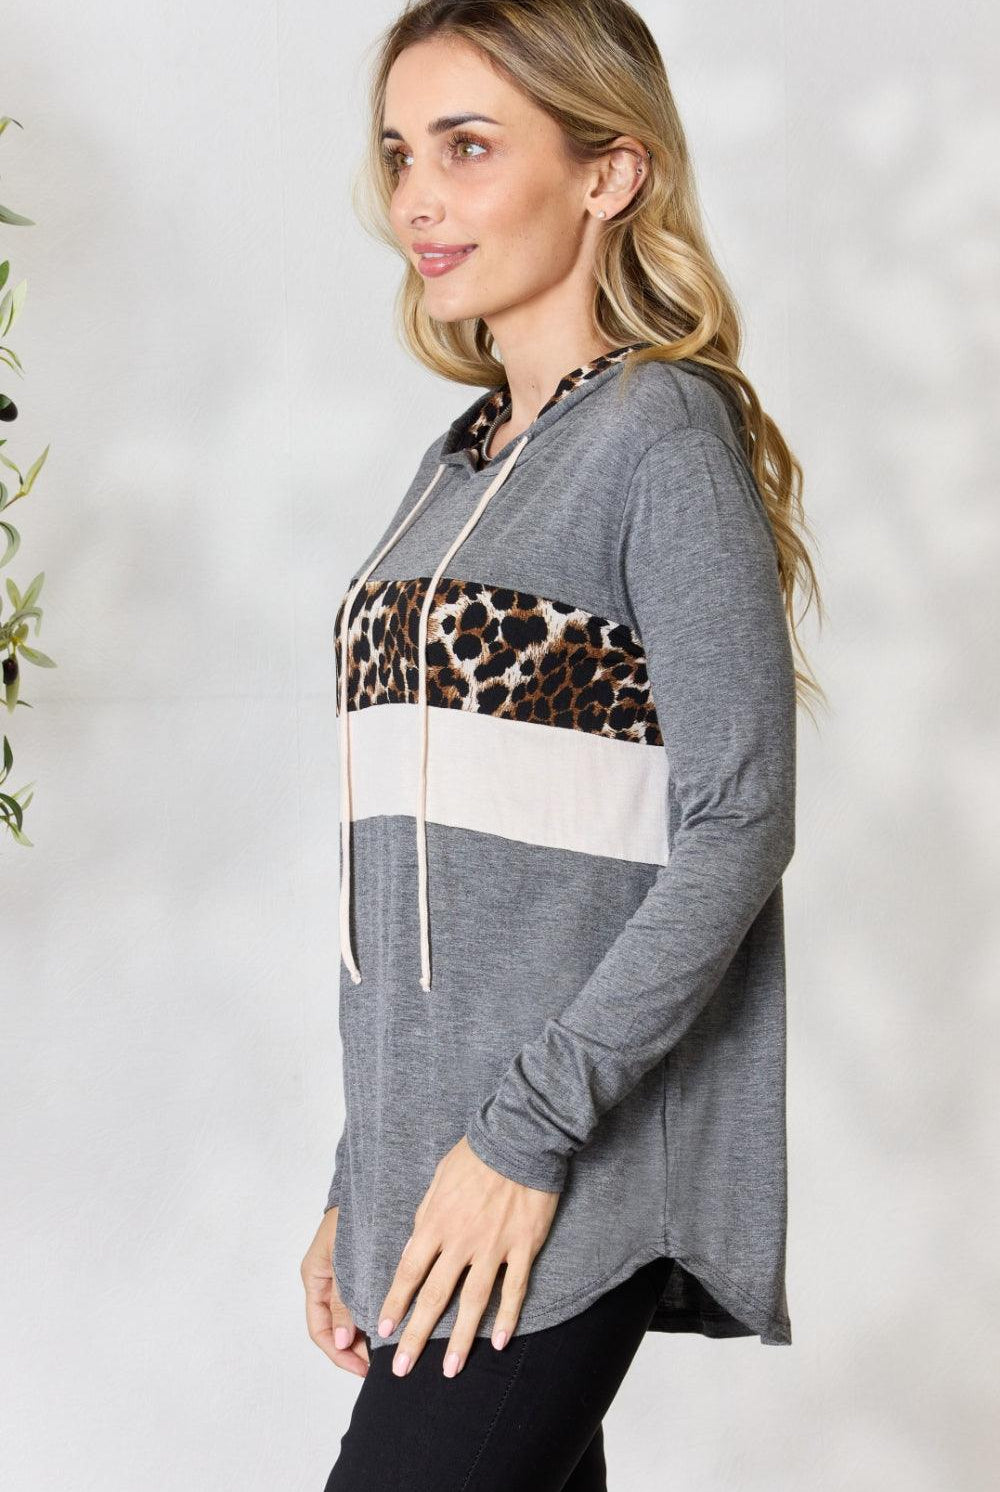 Women's Sweatshirts & Hoodies BiBi Leopard Color Block Drawstring Hoodie